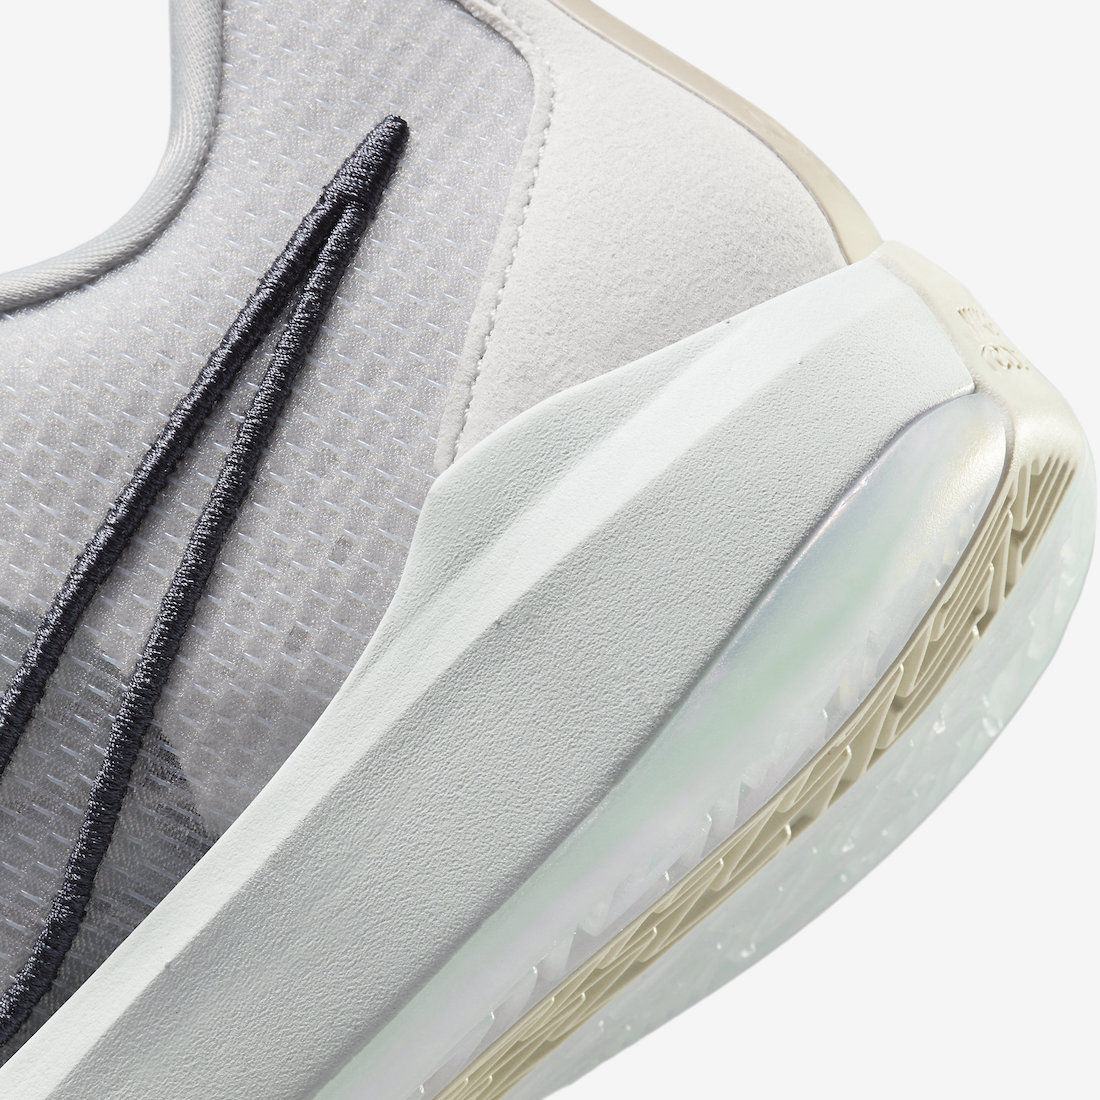 Nike Sabrina 1 Photon Dust FQ3381-010 Release Date | SneakerFiles